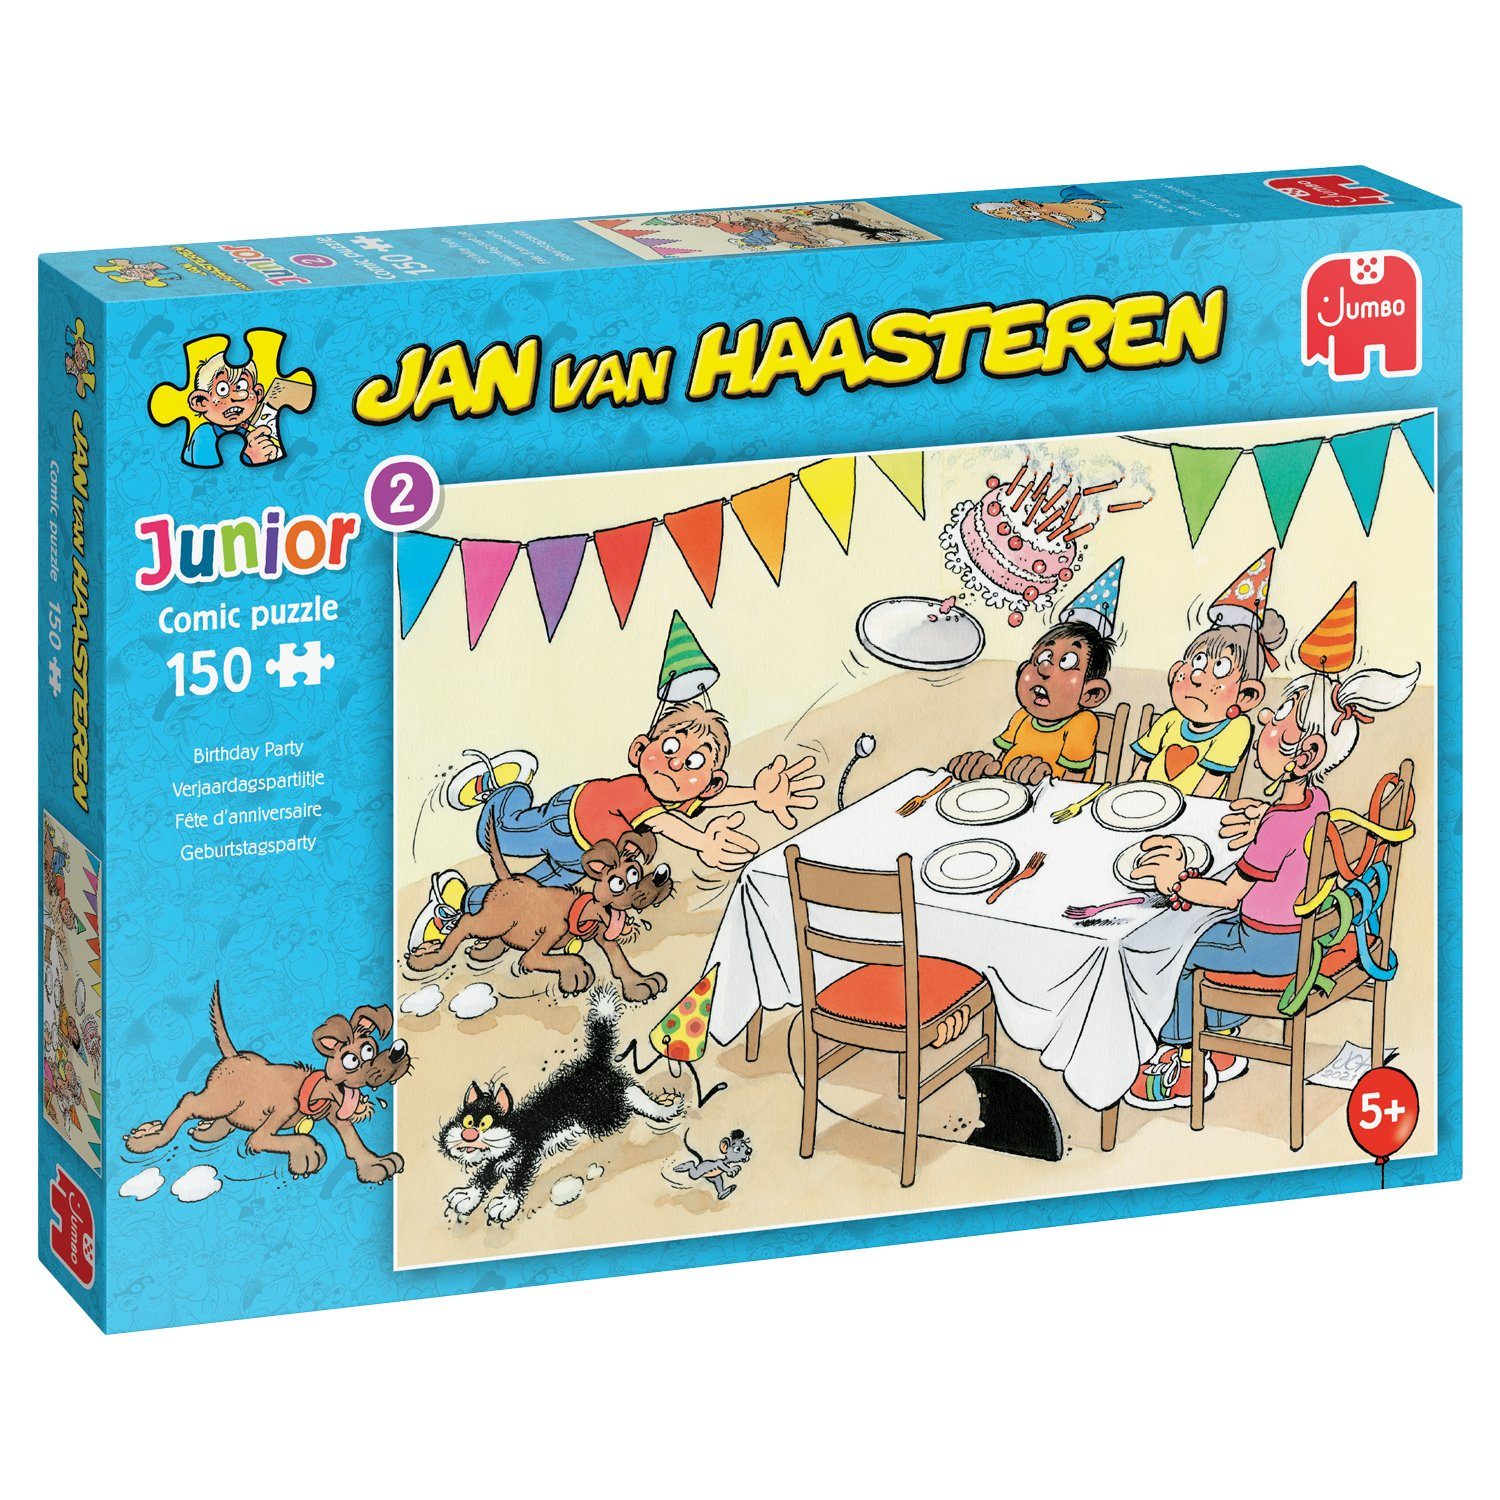 Jumbo Spiele Puzzle Jan van Haasteren Junior 2 Geburtstagsparty, 150 Puzzleteile, Made in Europe | Puzzle